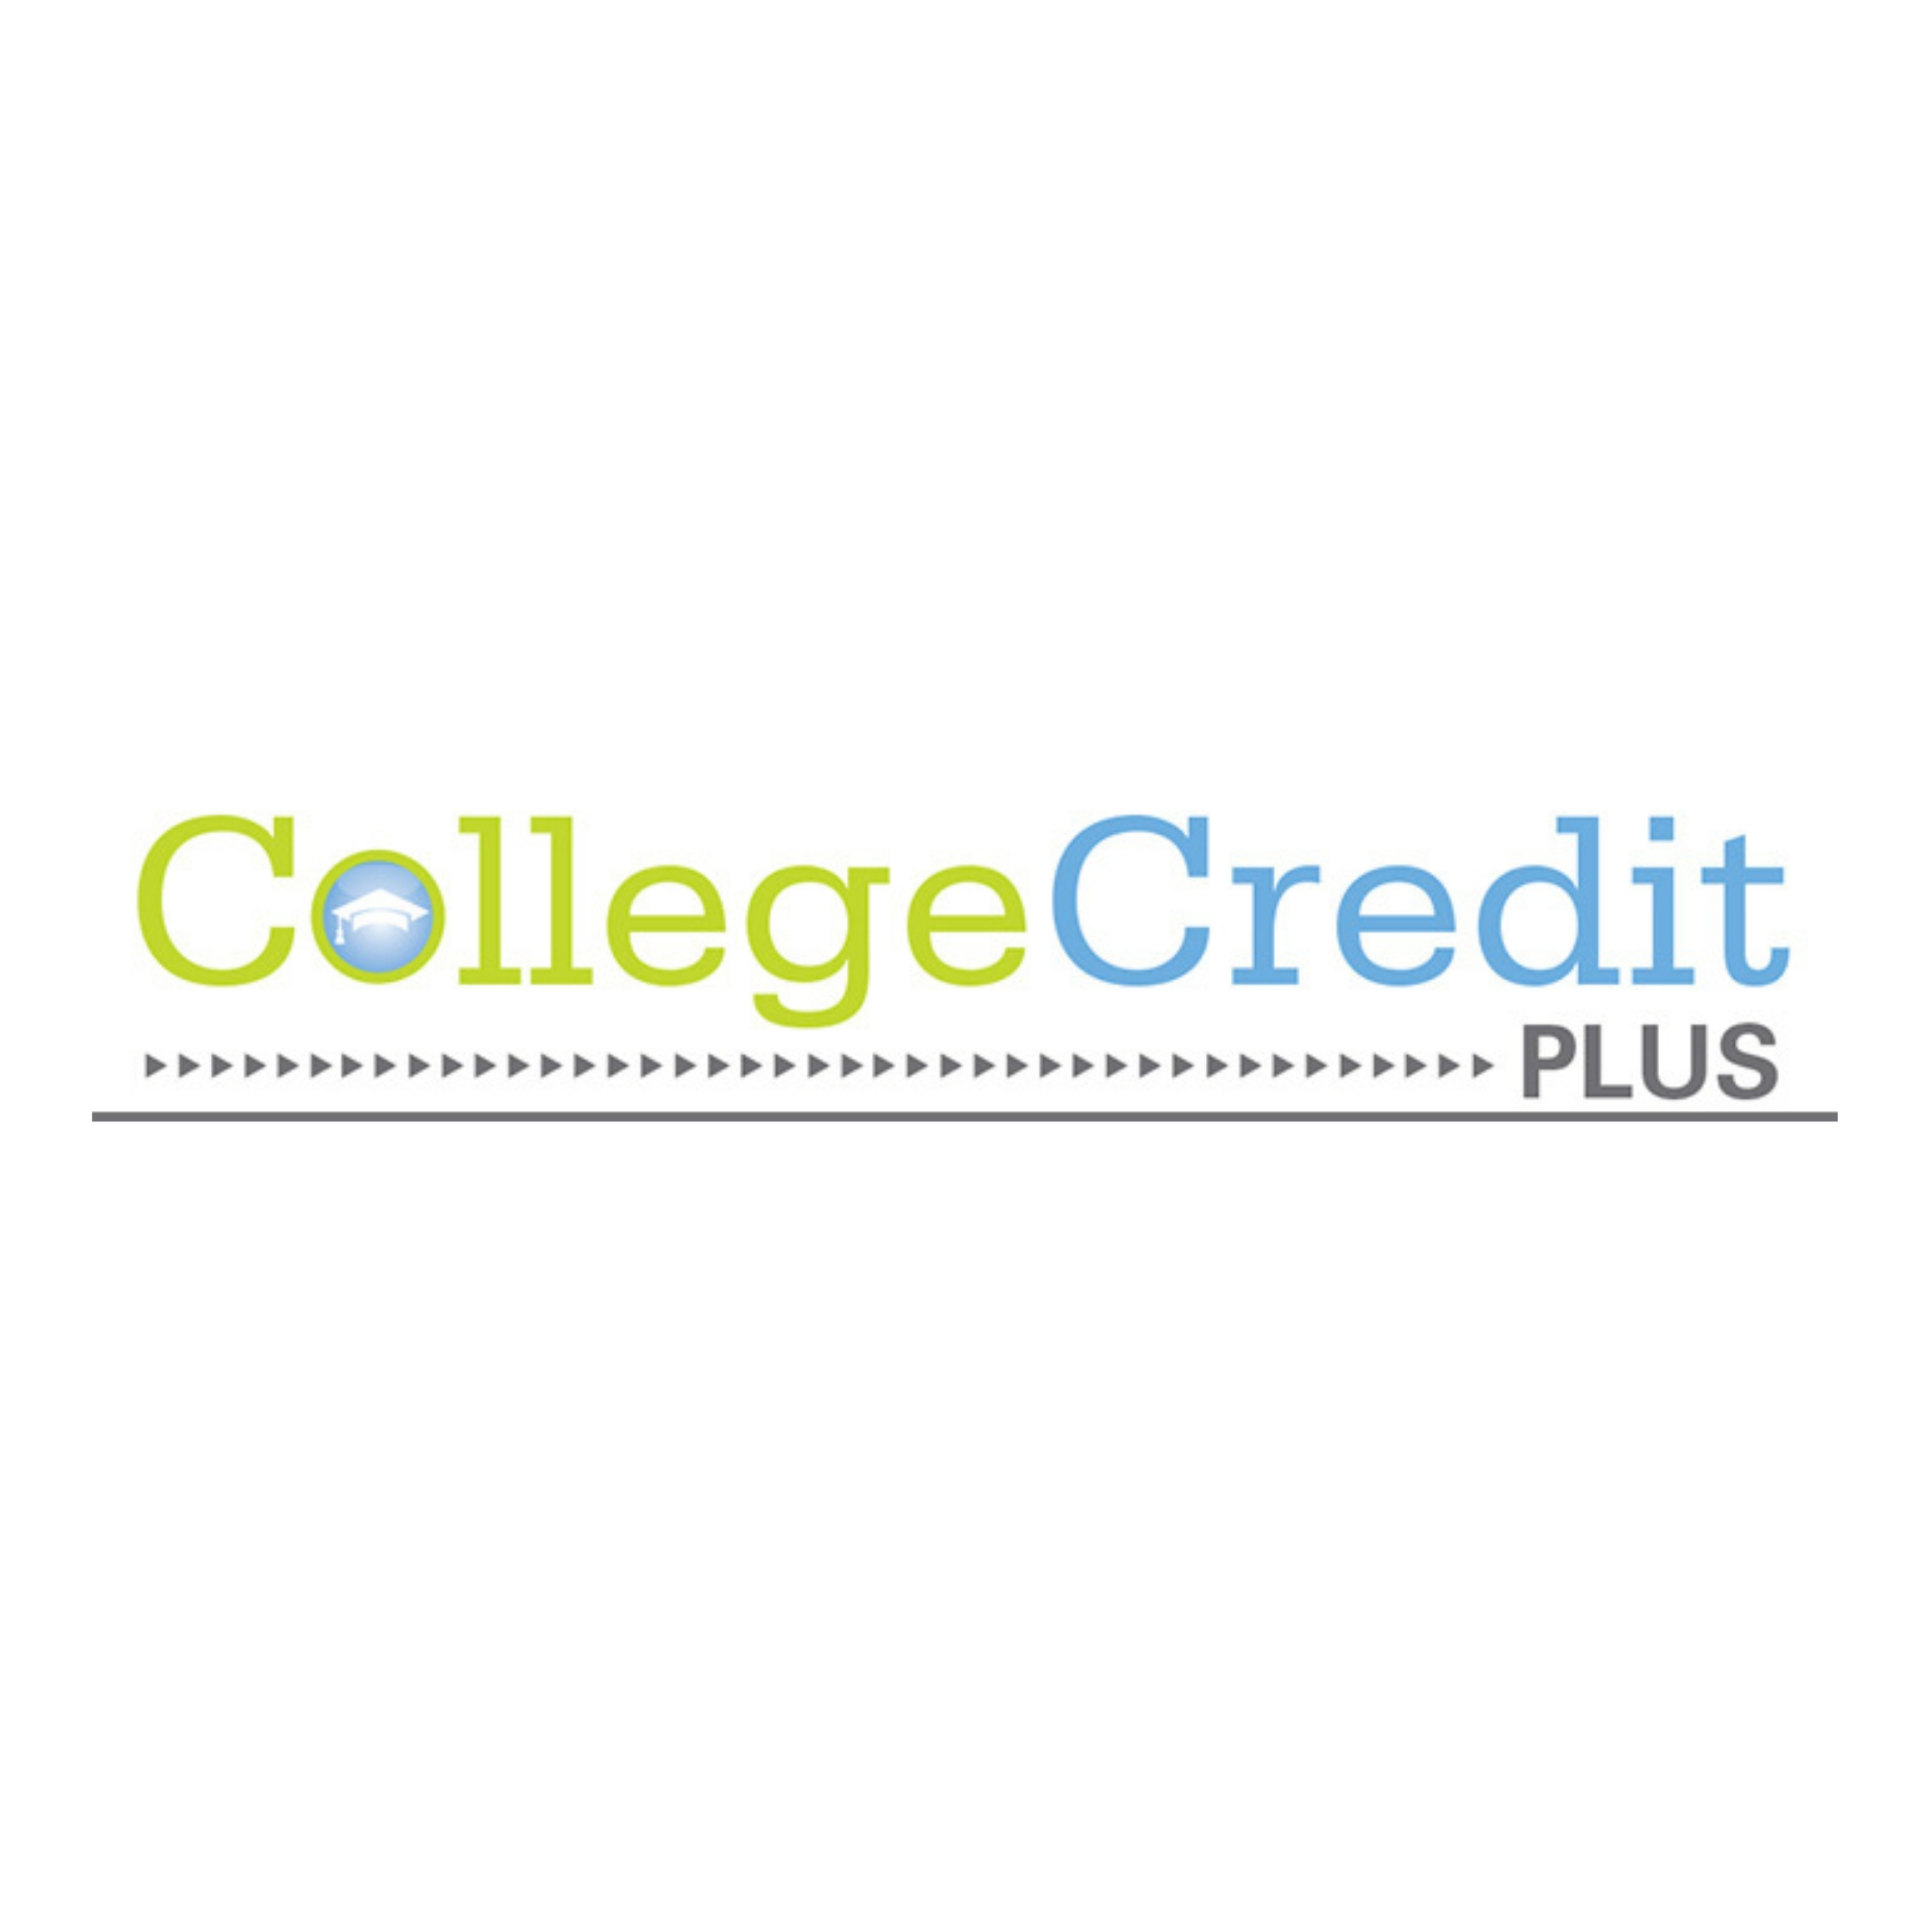 College Credit